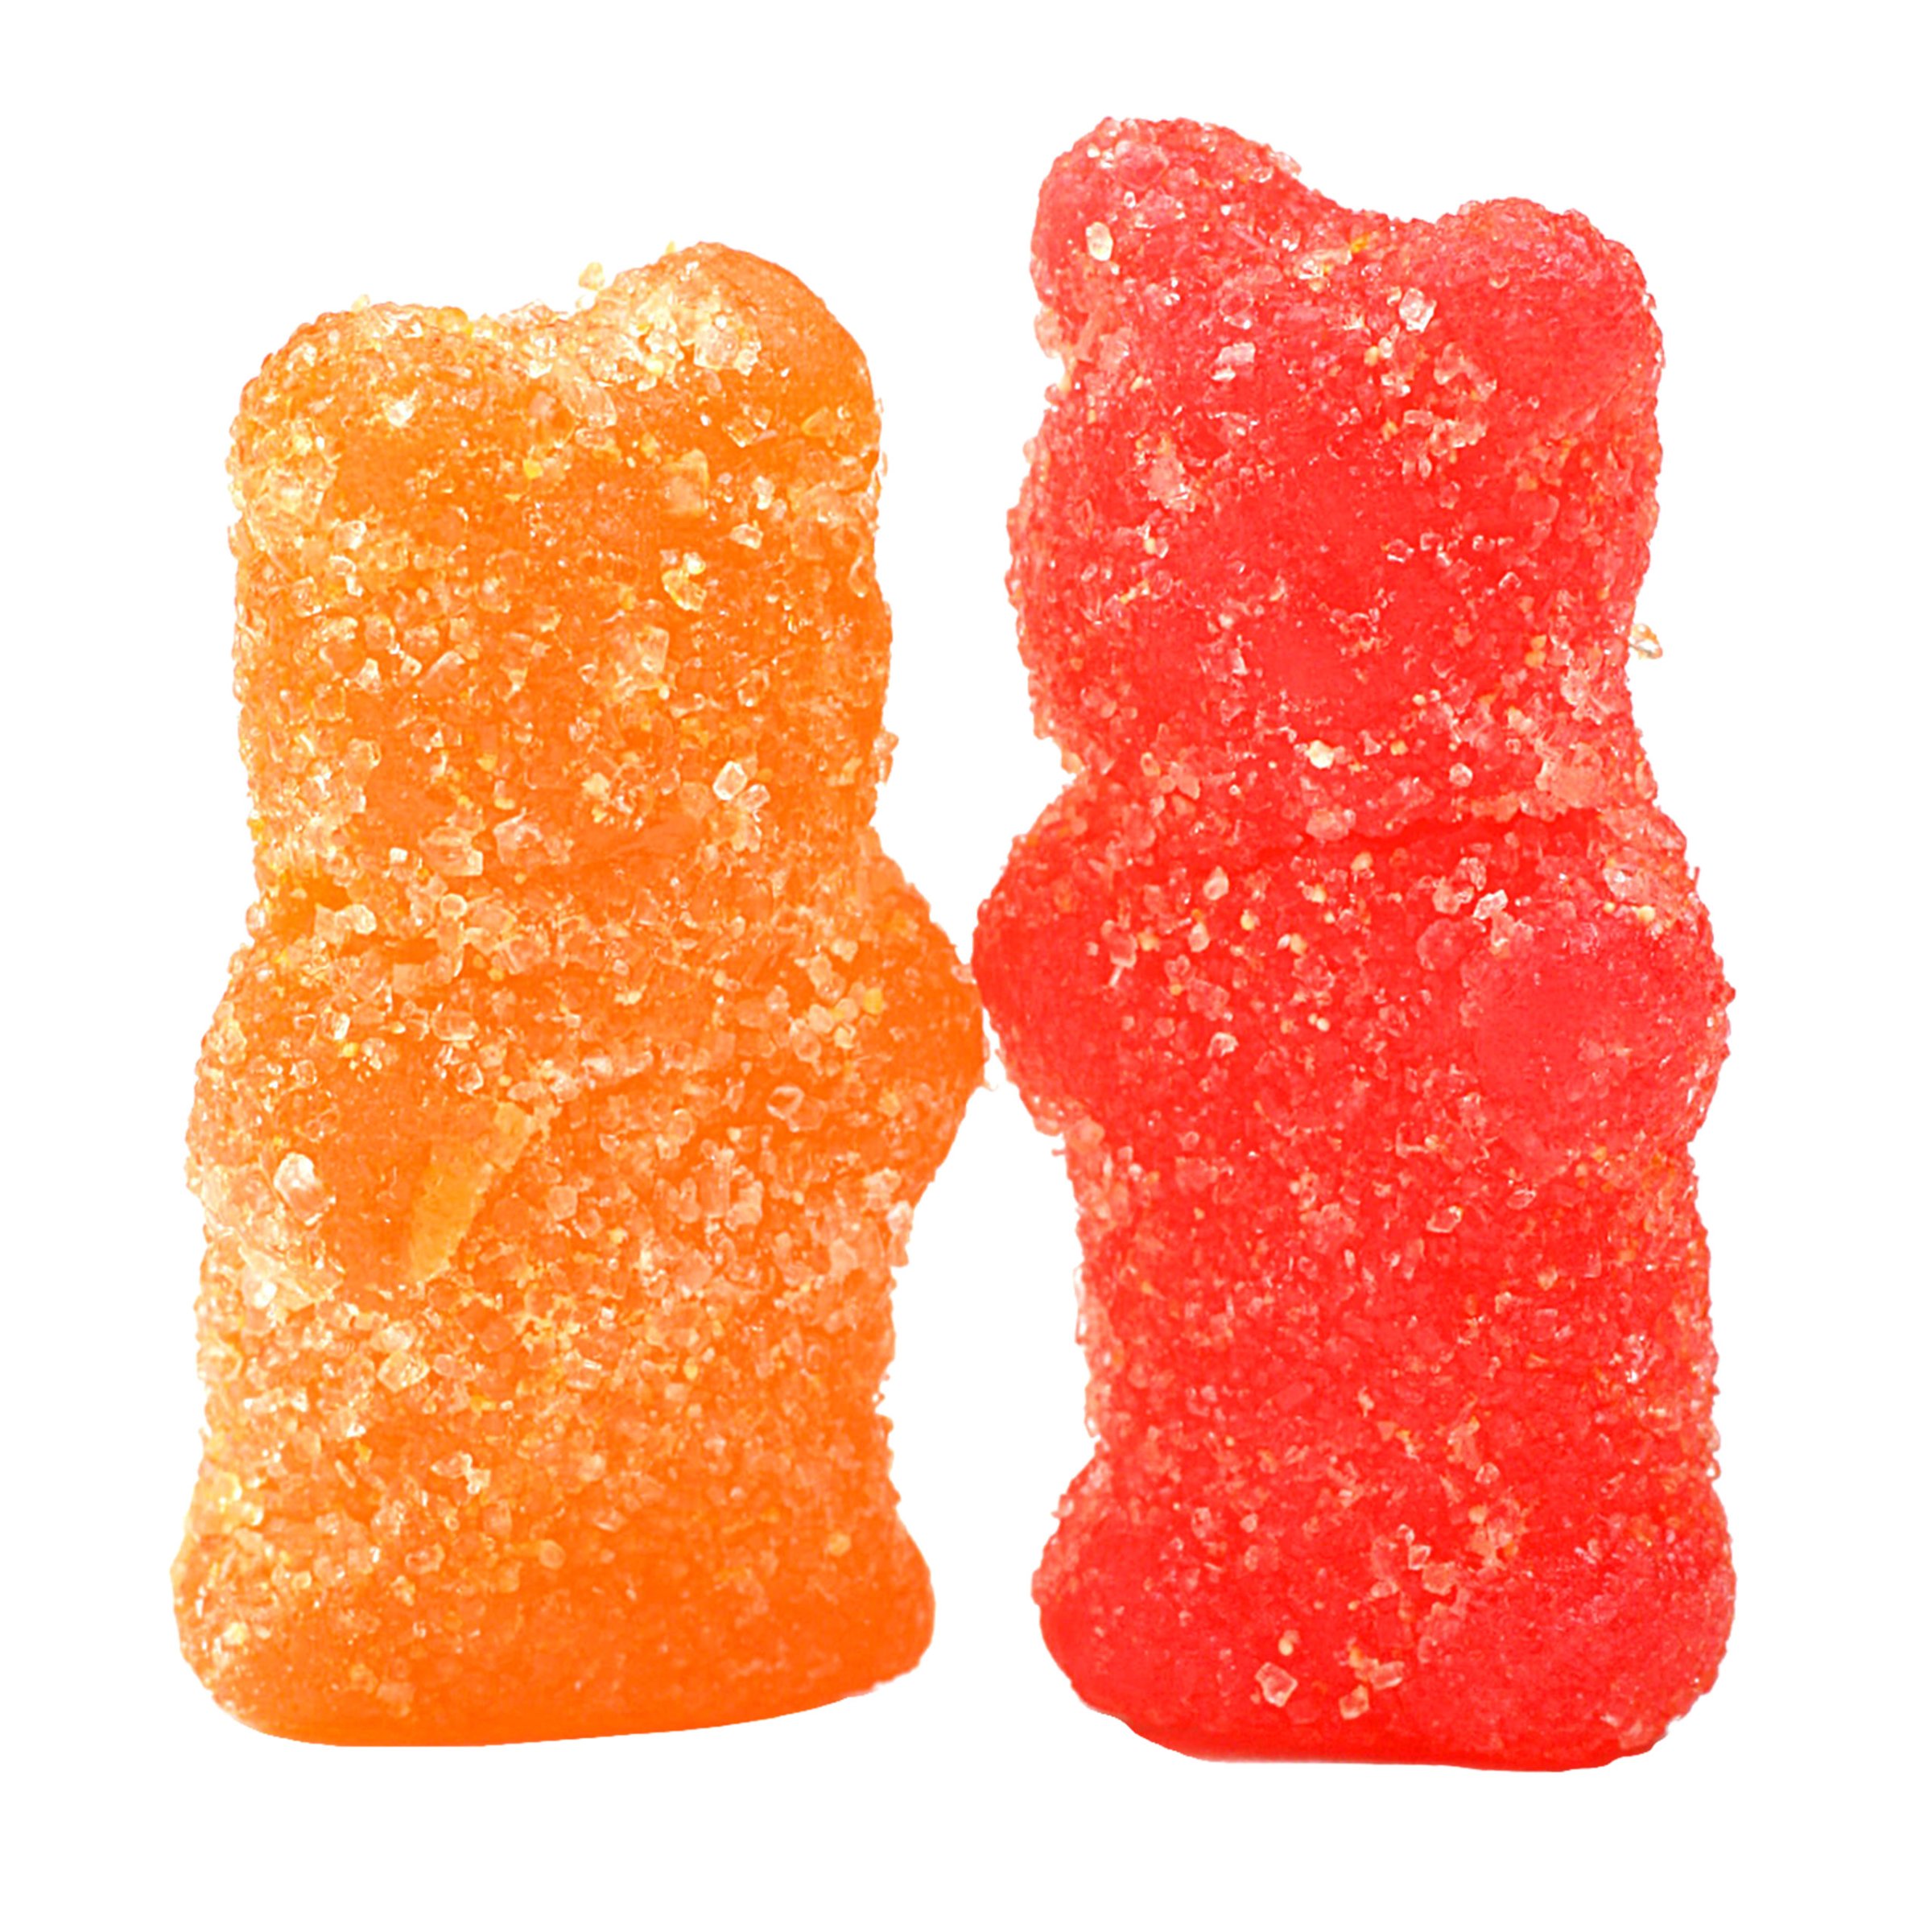 Edible marijuana gummy bears are legal in Colorado